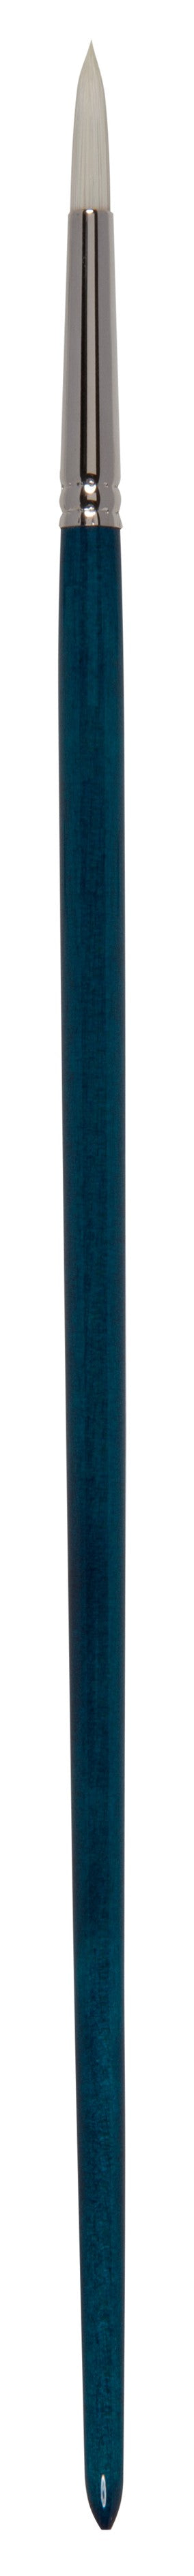 Zahn Acrylic Brush Round, Infinity, 9975 Size 2